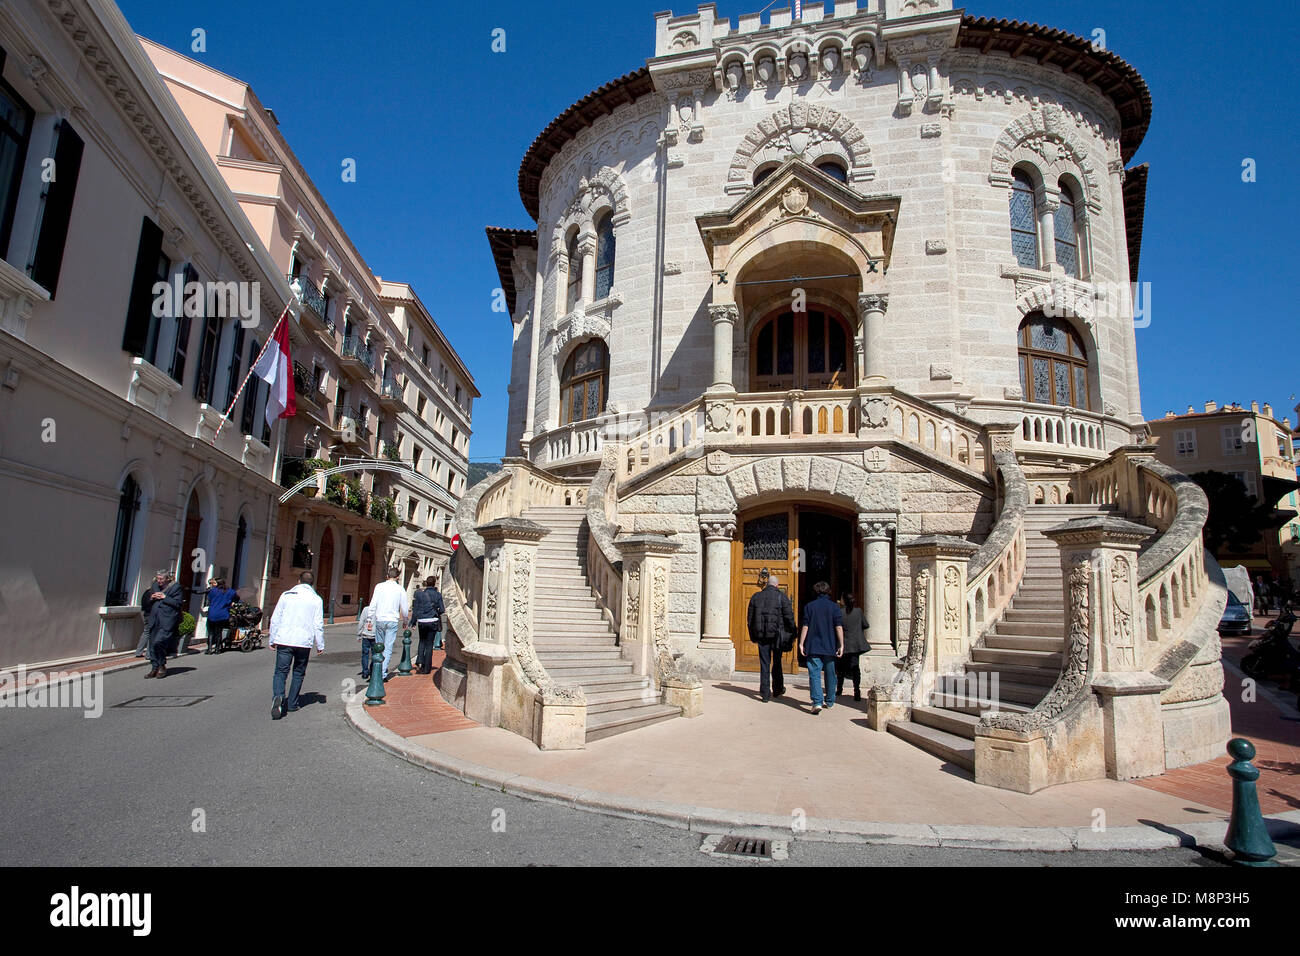 Palais de Justice de Monaco, court building, Monaco-Ville, La Condamine, Principality of Monaco, Côte d'Azur, french riviera, Europe Stock Photo